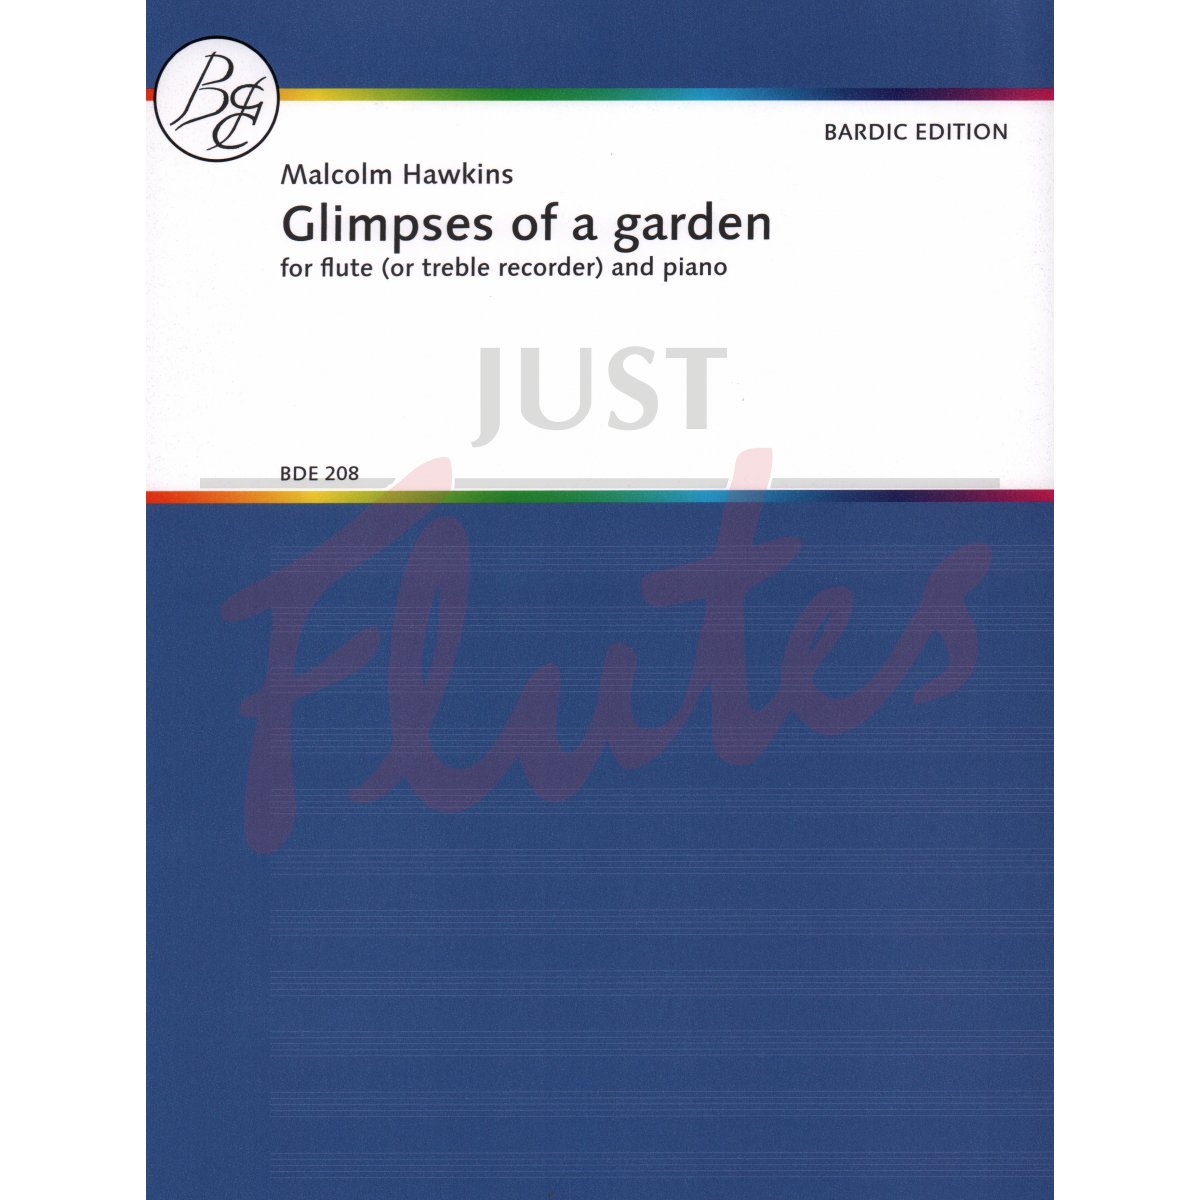 Glimpses Of A Garden for Flute (Treble Recorder) and Piano